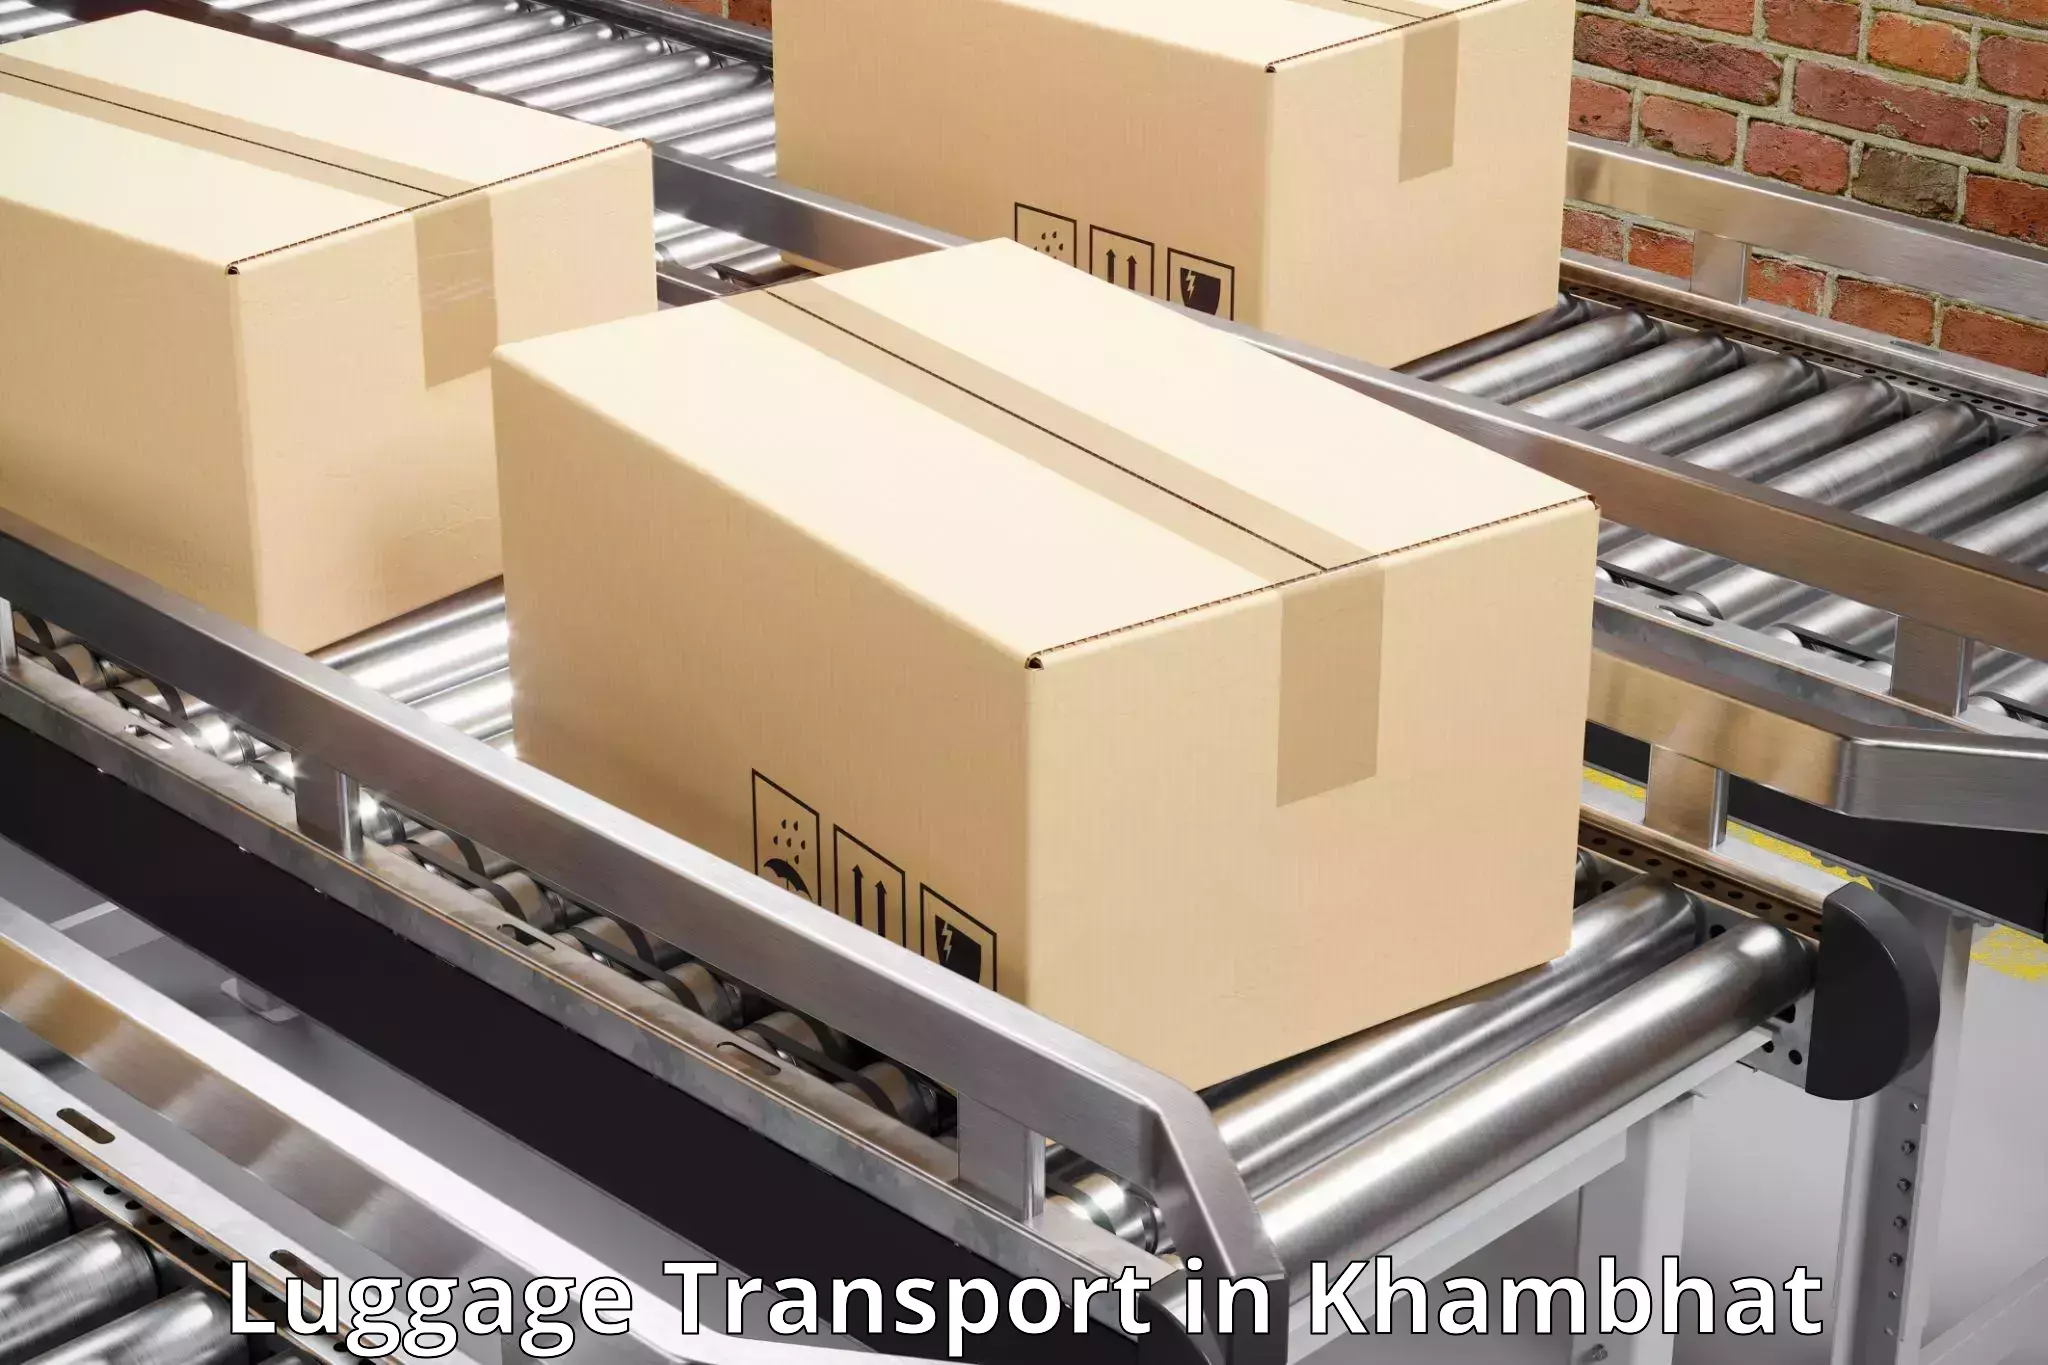 Multi-destination luggage transport in Khambhat